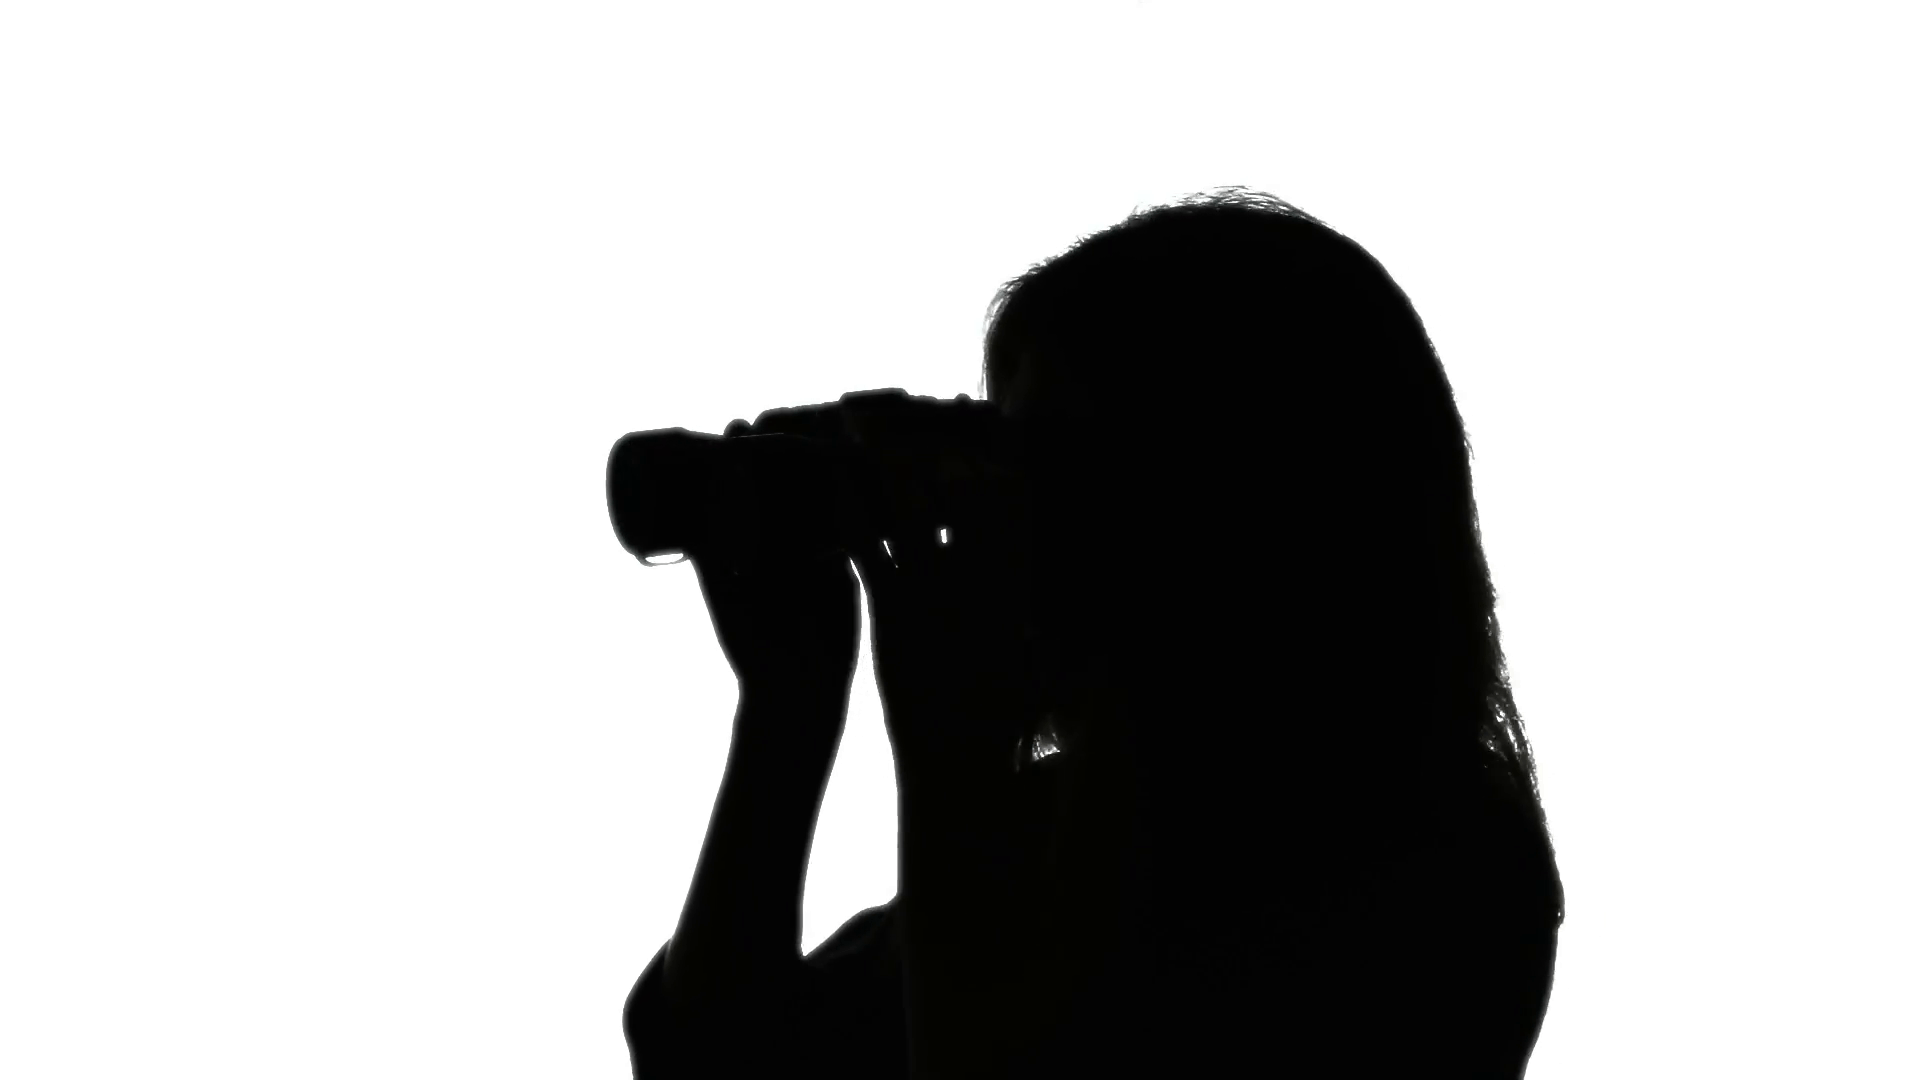 Silhouette Woman Binoculars 1. A Woman L